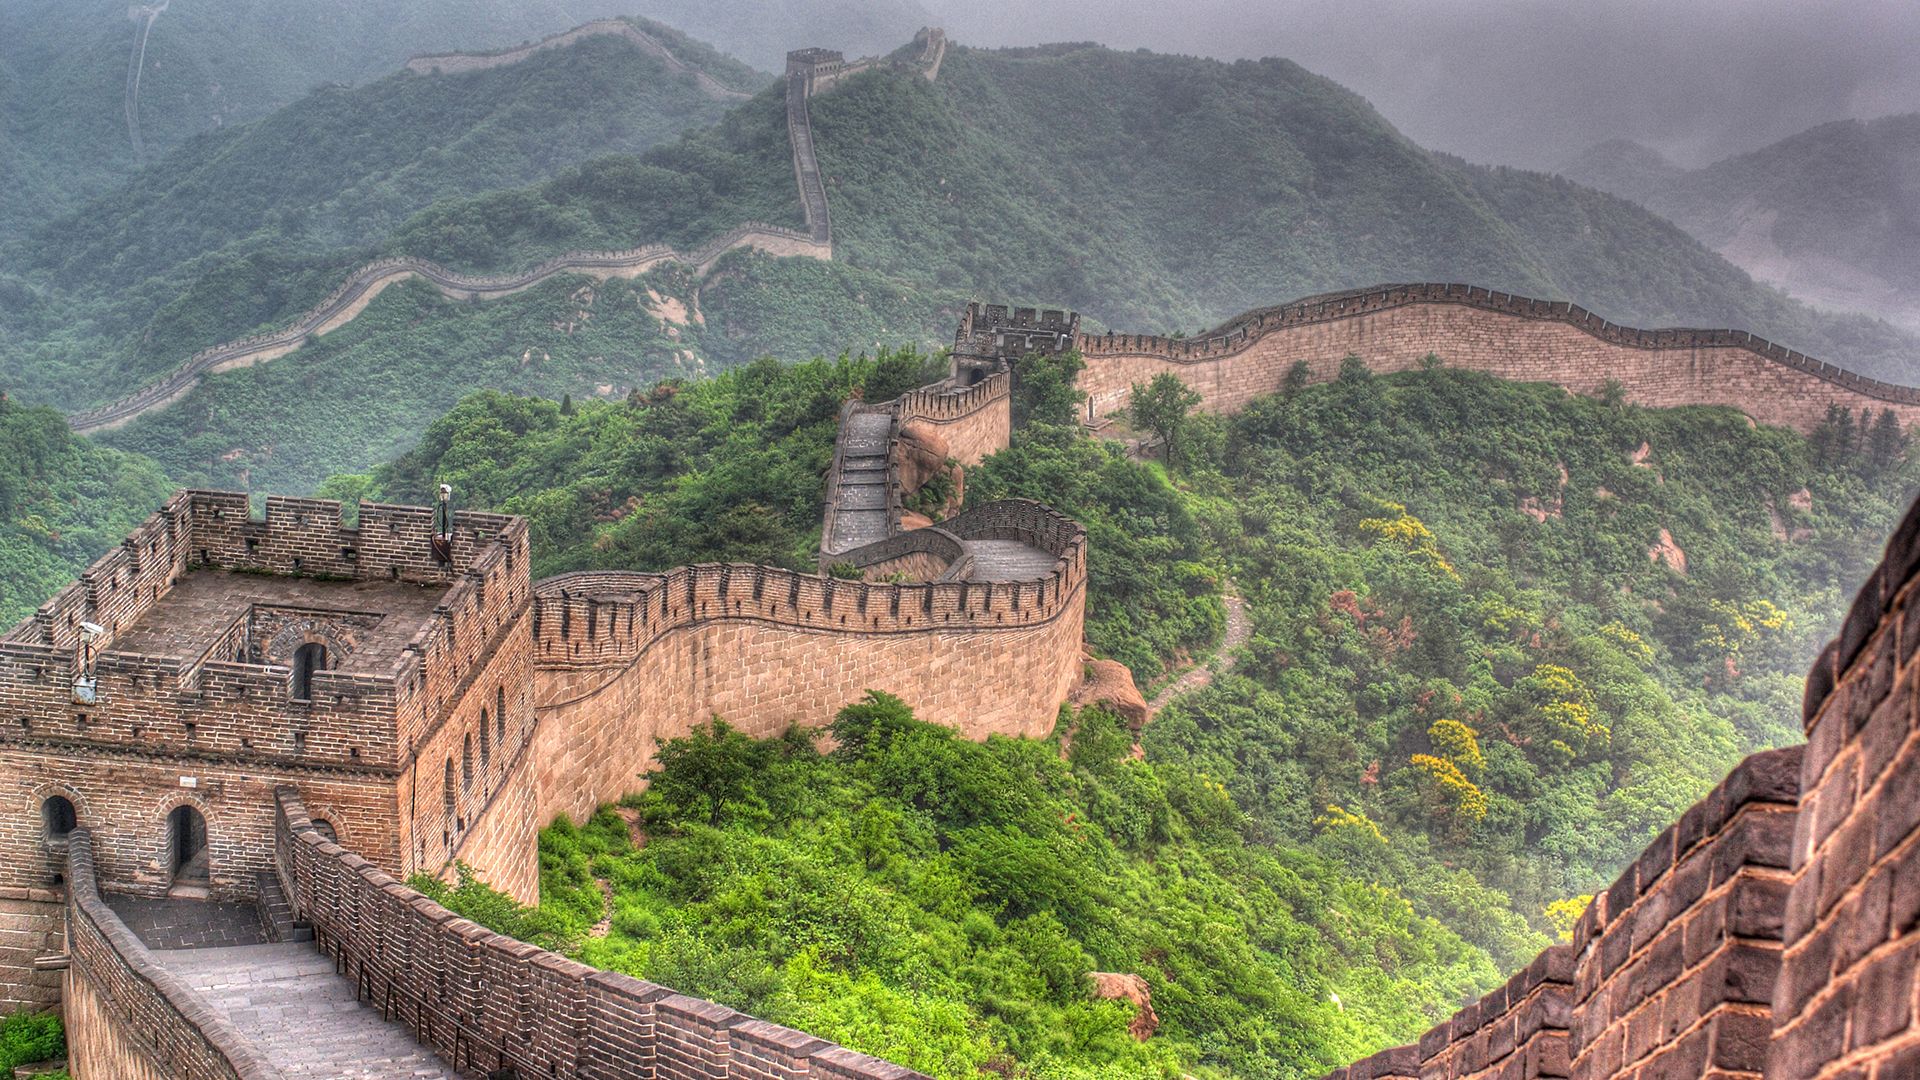 The Great Wall of China, China - Celebrating Landmark Buildings Around the World